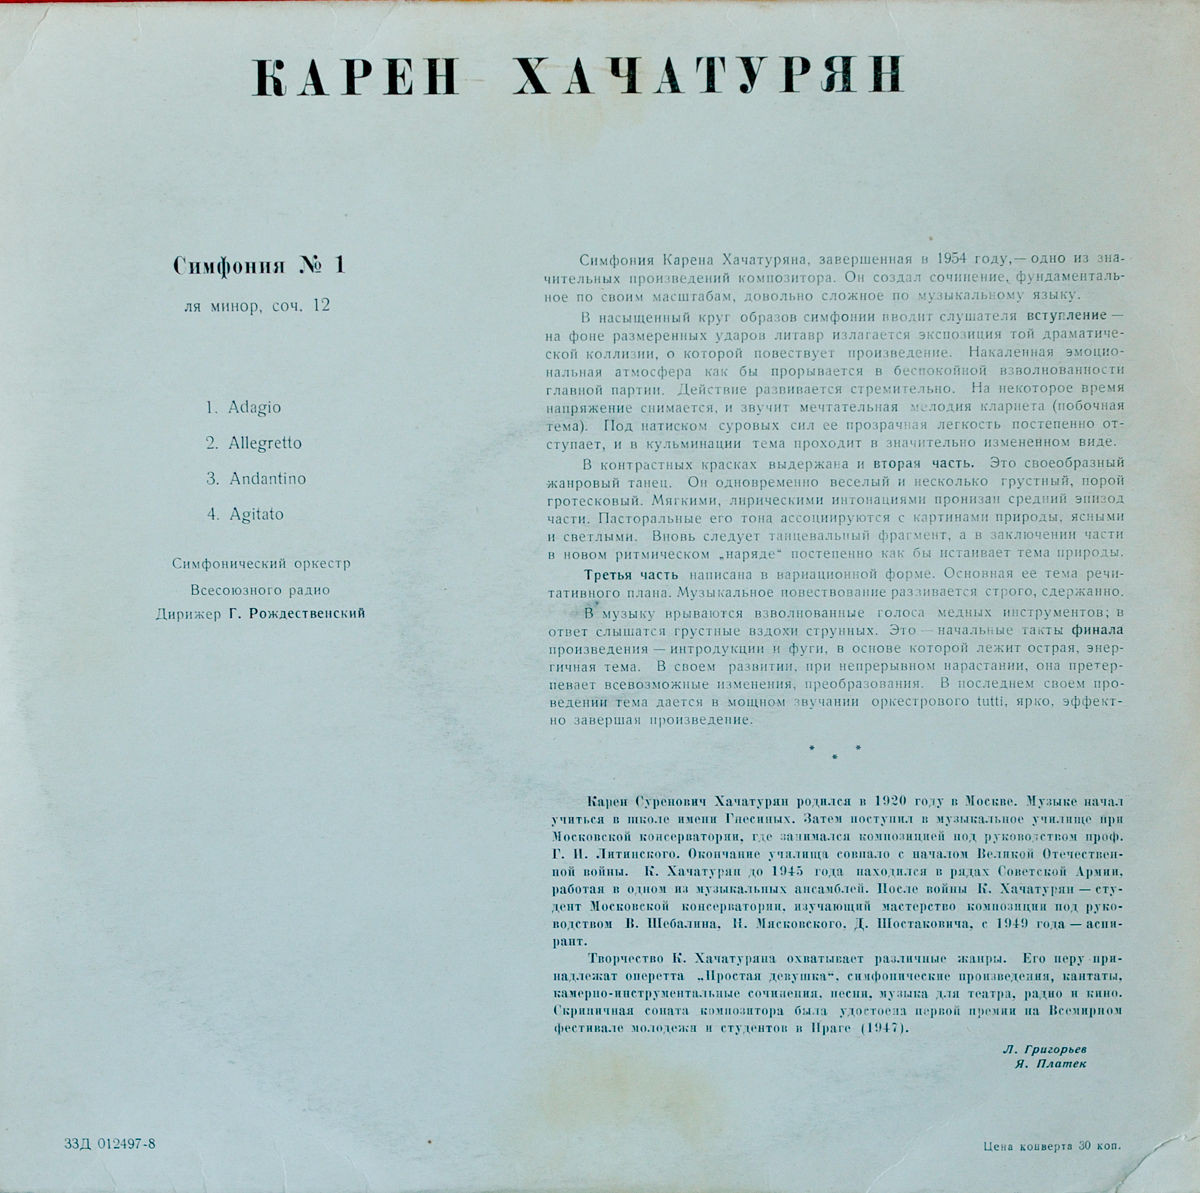 K. ХАЧАТУРЯН (1920-2011) Симфония №1 ля минор, соч. 12 (Г. Рождественский)